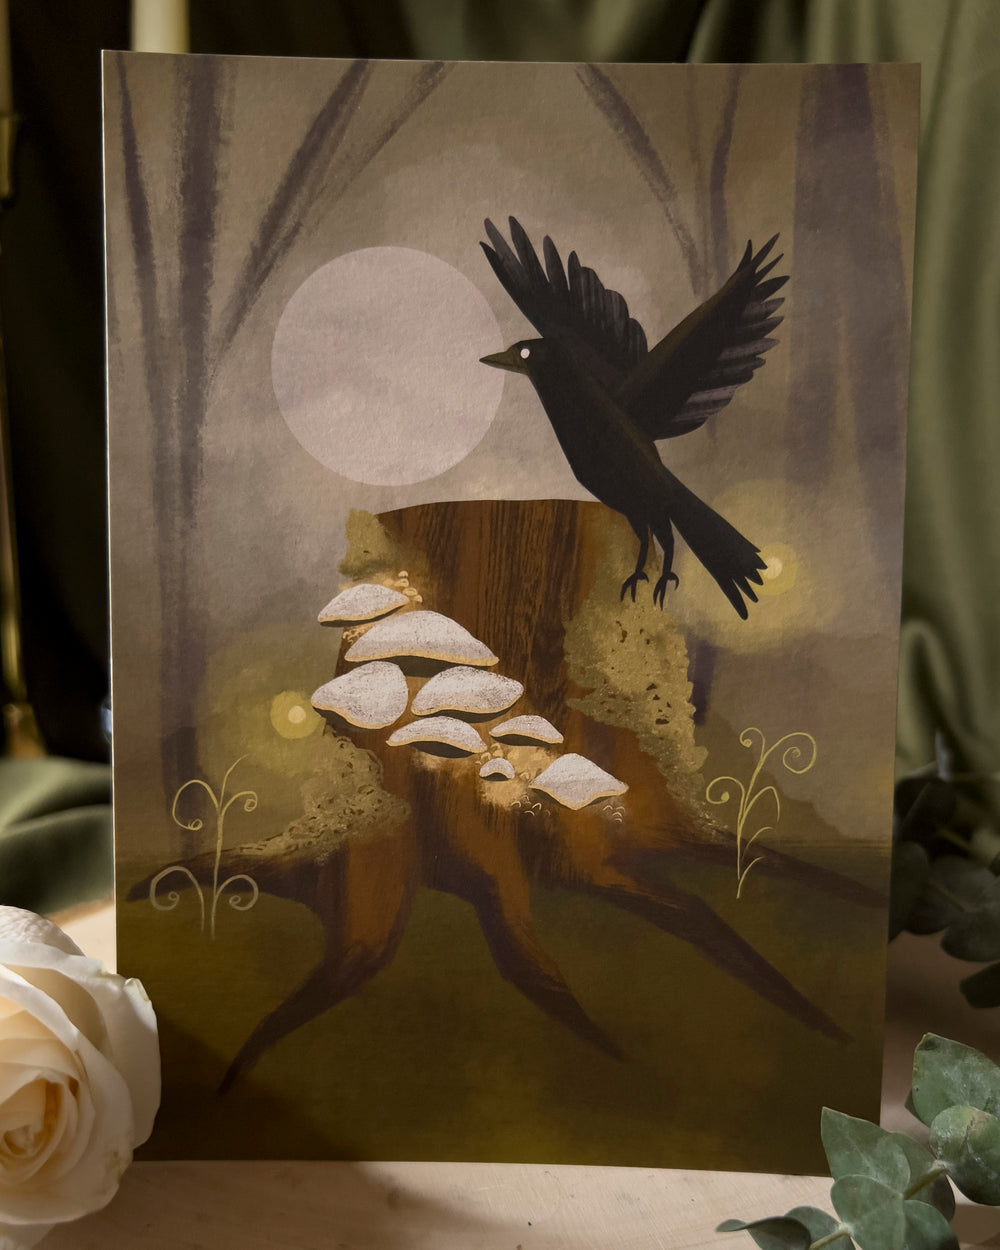 An art print depicting a raven flying near a tree stump that's growing mushrooms.